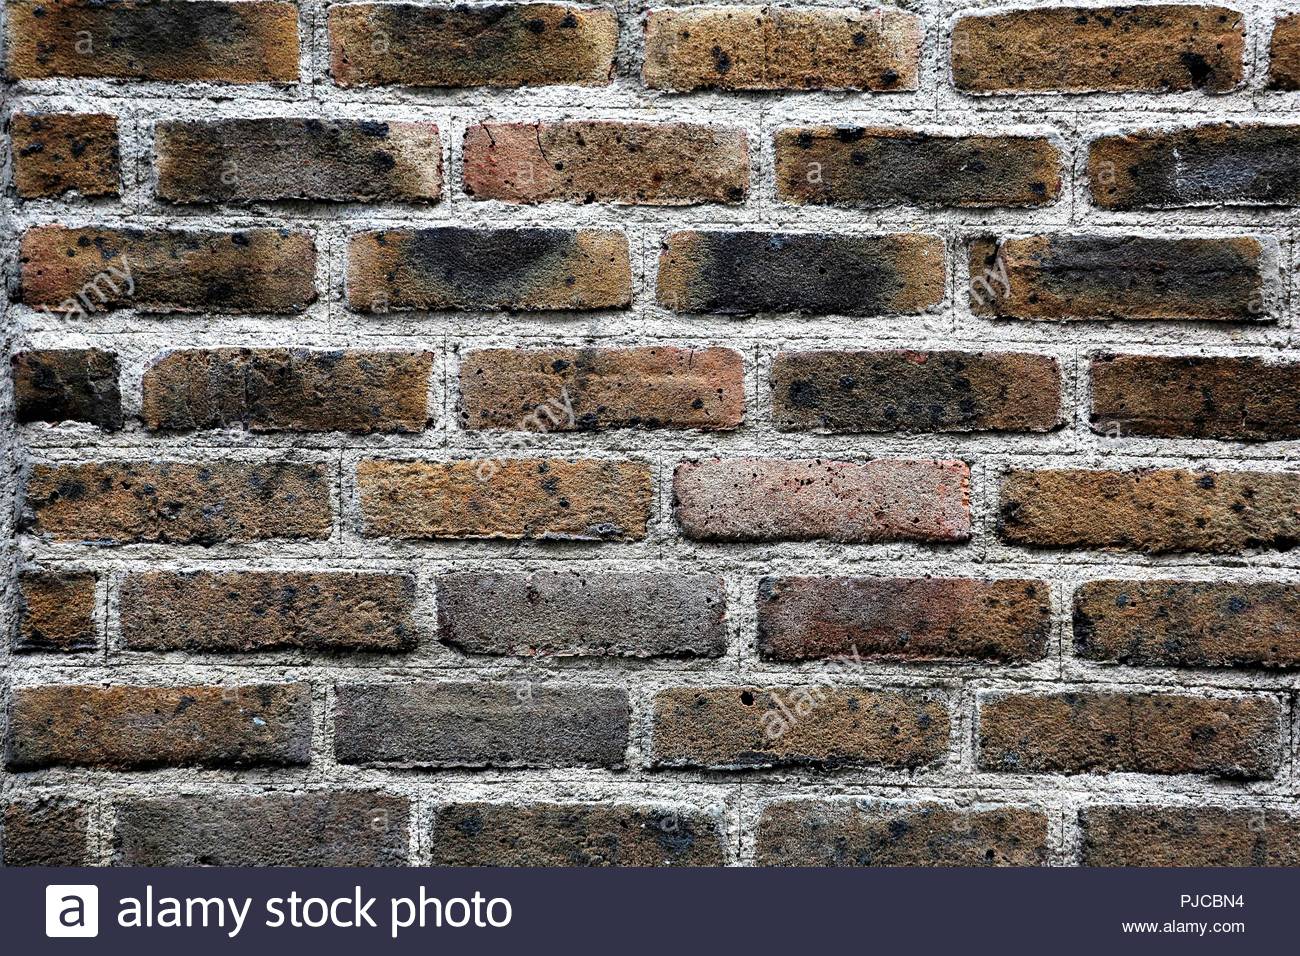 Brickwork in a wall in an urban centre as evening light falls Stock Photo